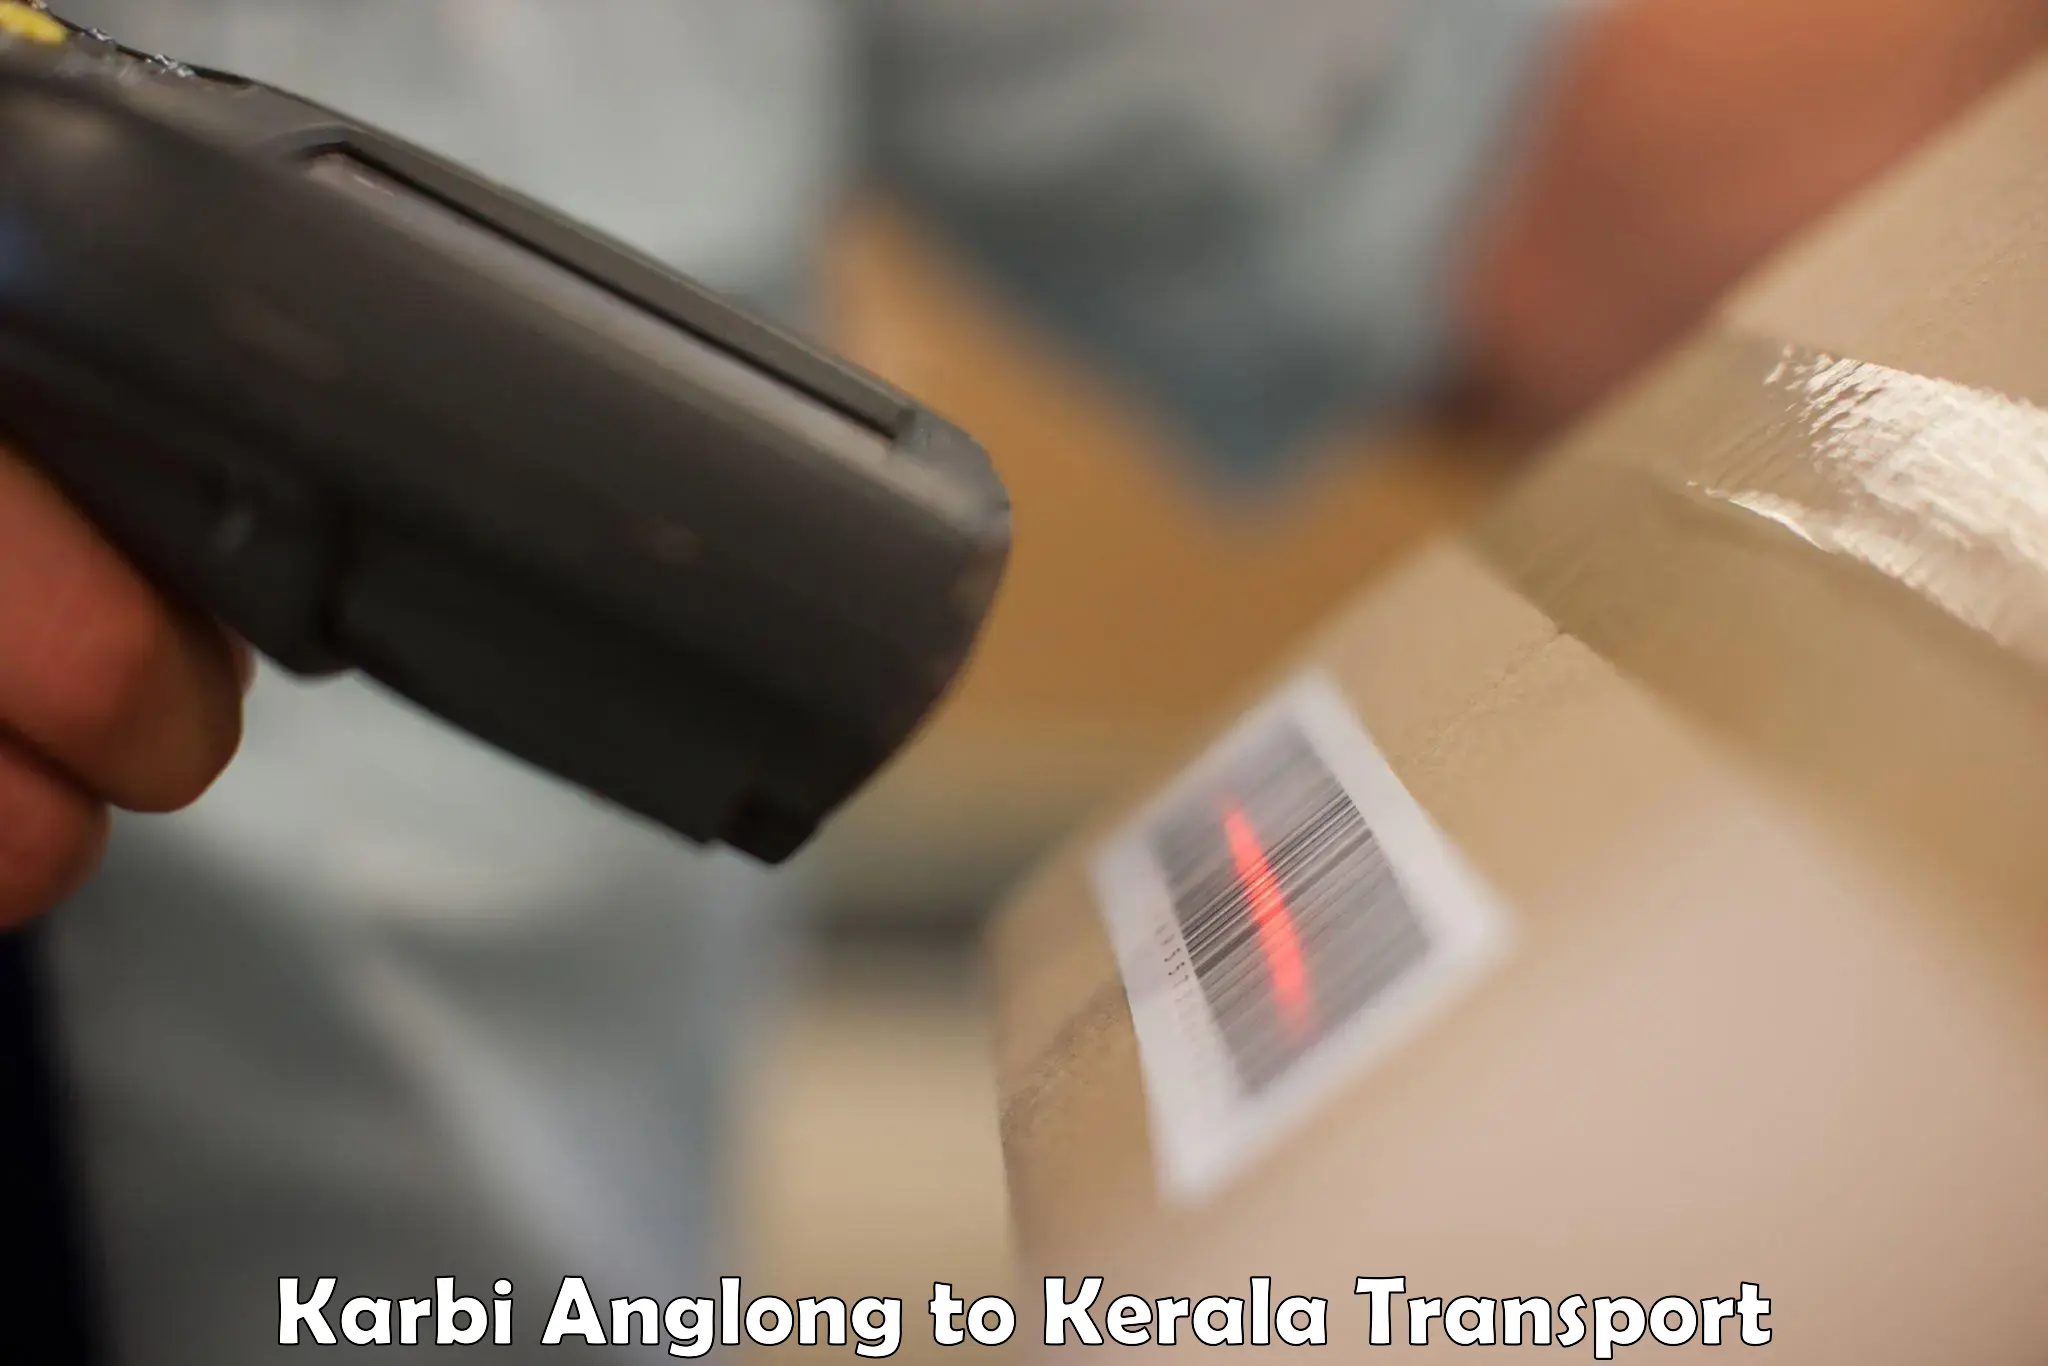 Transport in sharing Karbi Anglong to Munnar